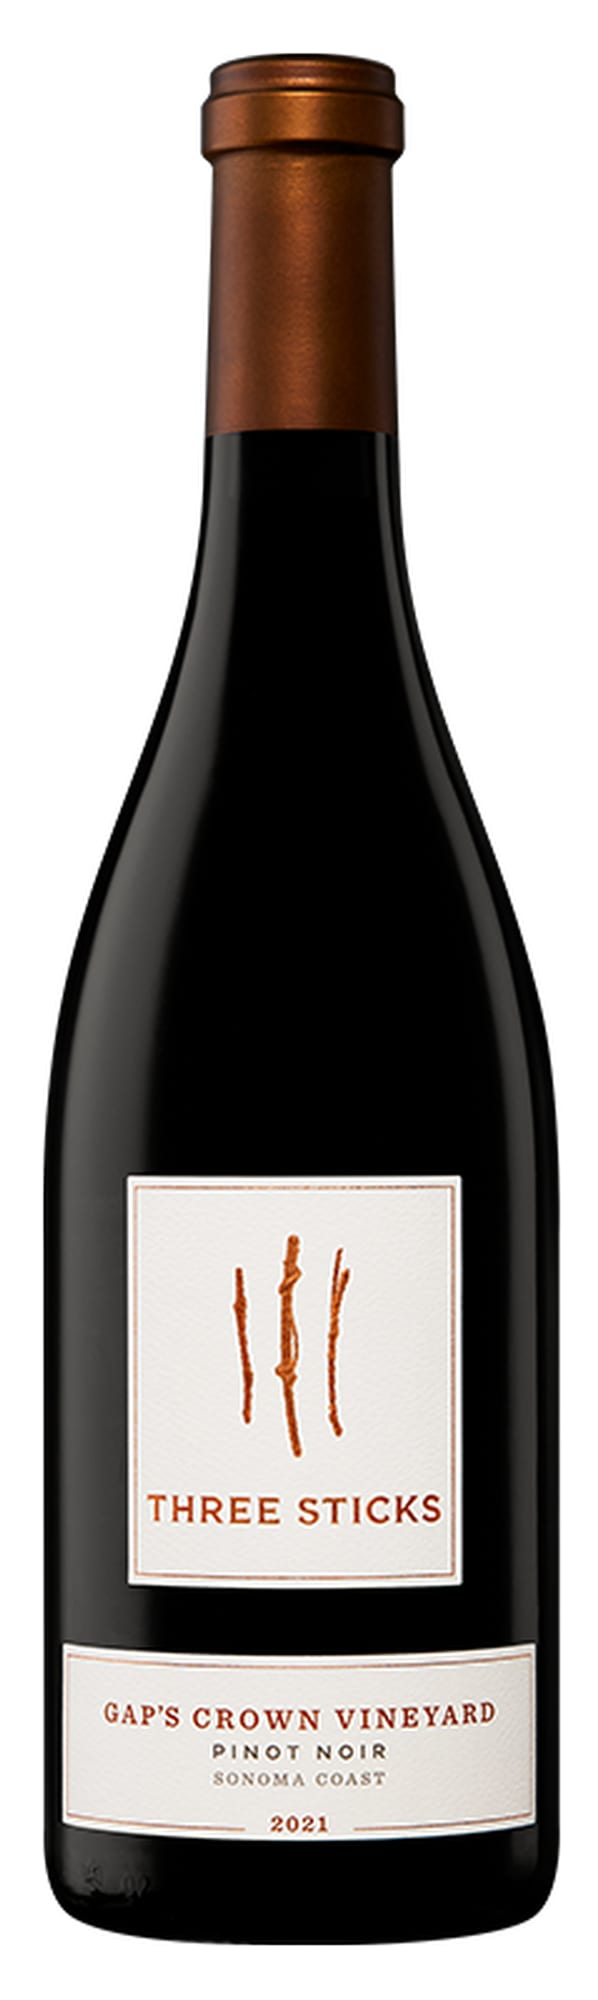 Three Sticks - Pinot Noir Gap's Crown Vineyard 2021 (750ml) (750ml)